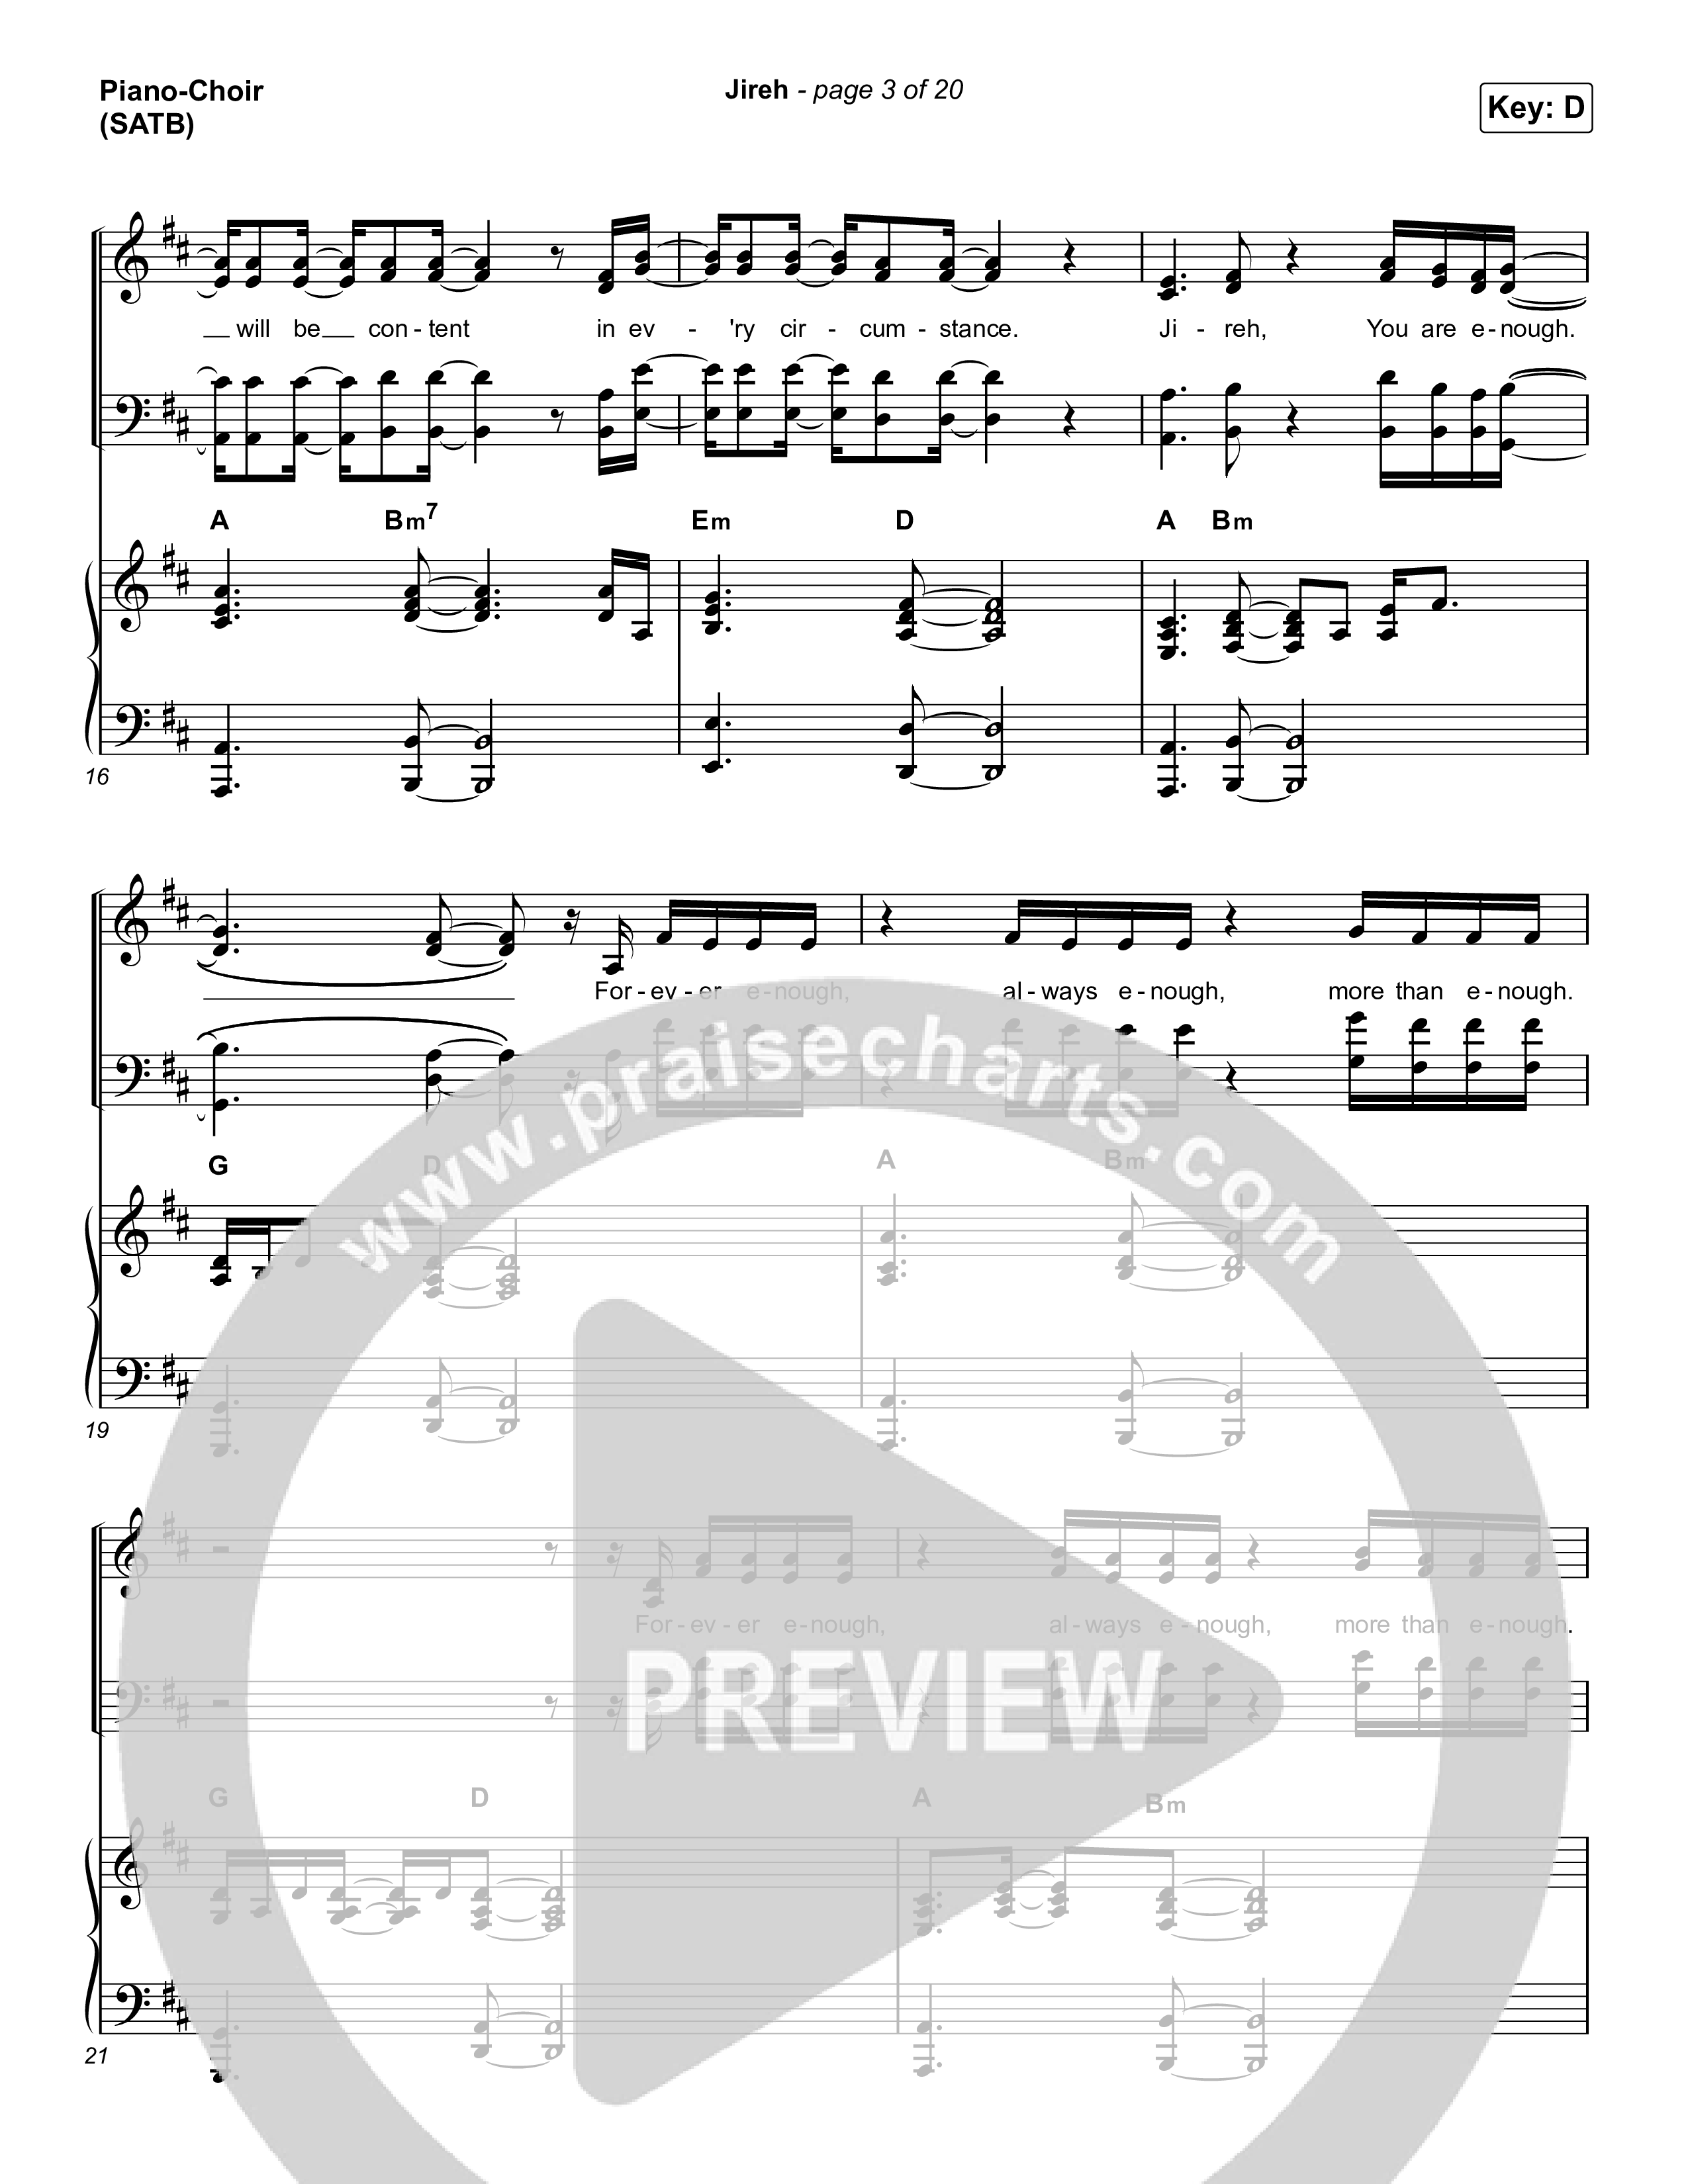 Jireh (Choral Anthem SATB) Piano/Choir (SATB) (Maverick City Music / Elevation Worship / Arr. Luke Gambill)